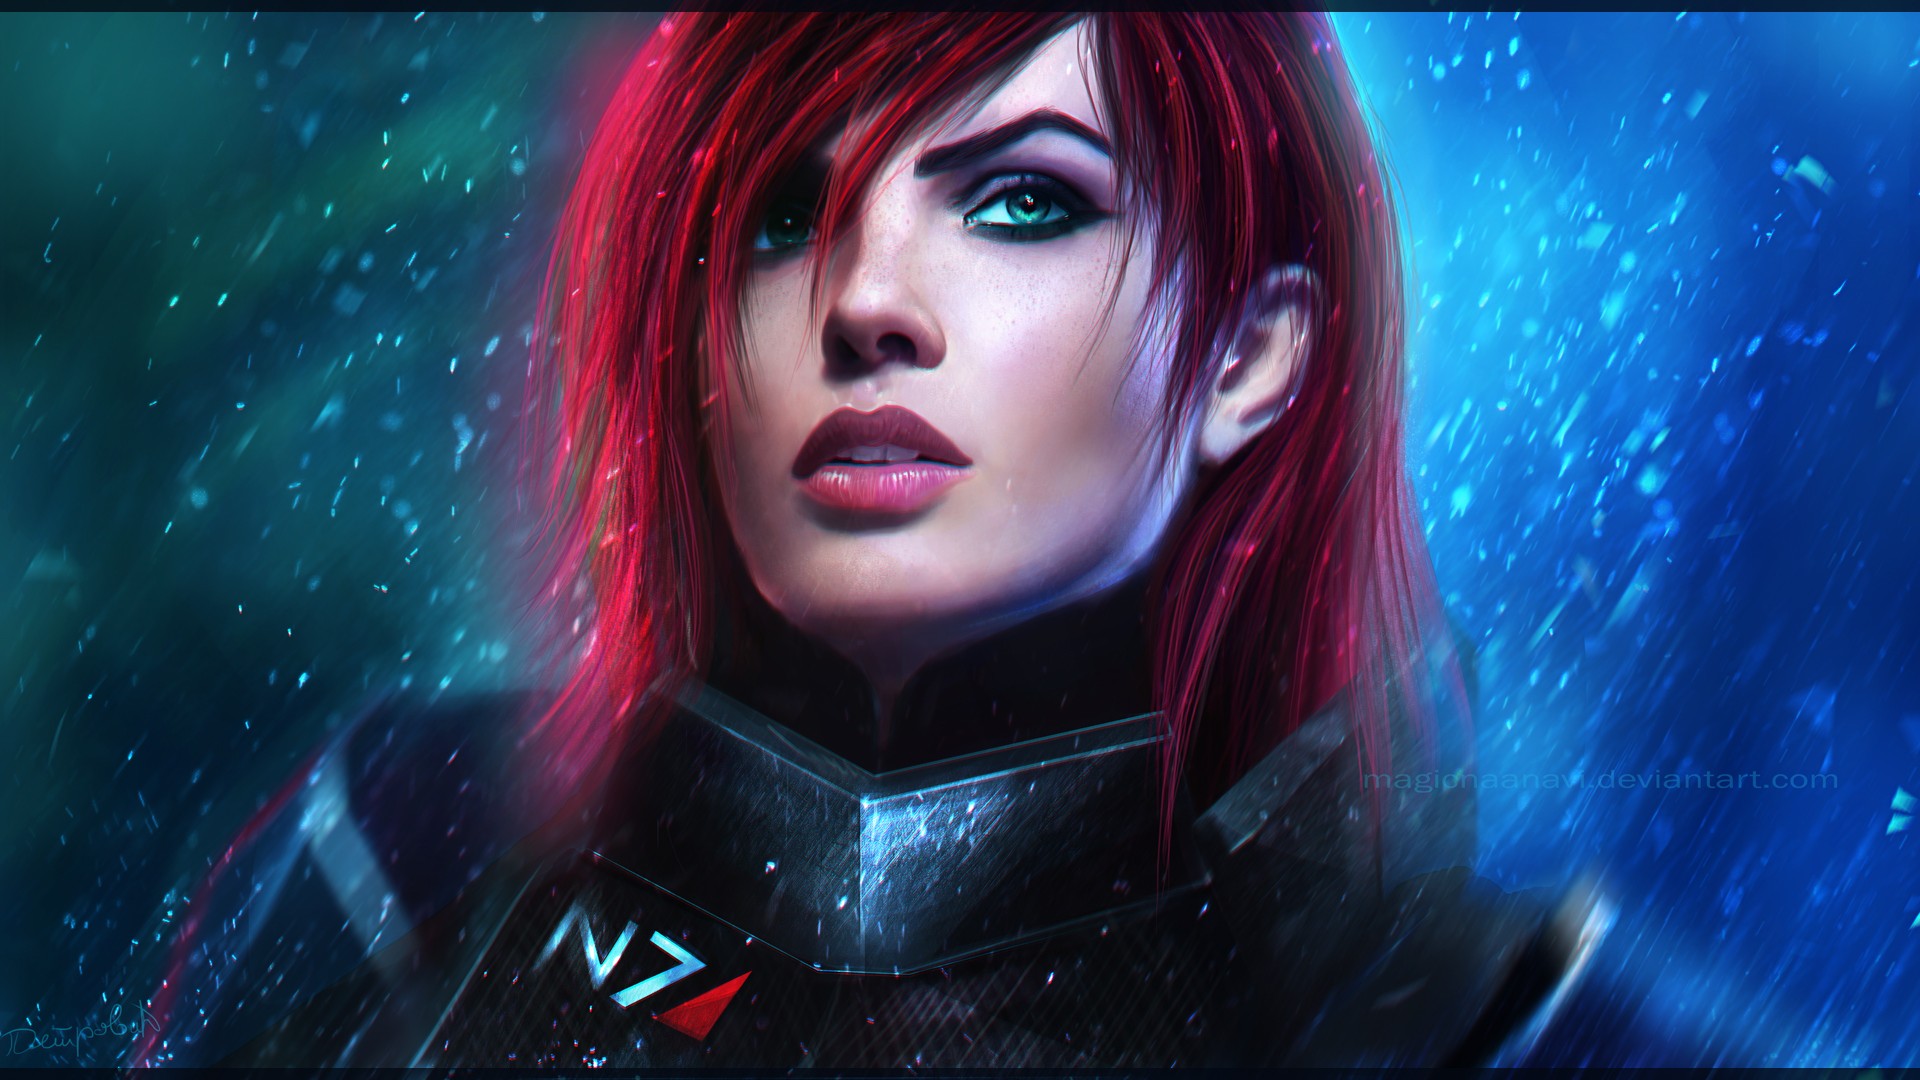 Realistic Mass Effect Mass Effect 3 MagicnaAnavi Artwork Commander Shepard Jane Shepard N7 1920x1080